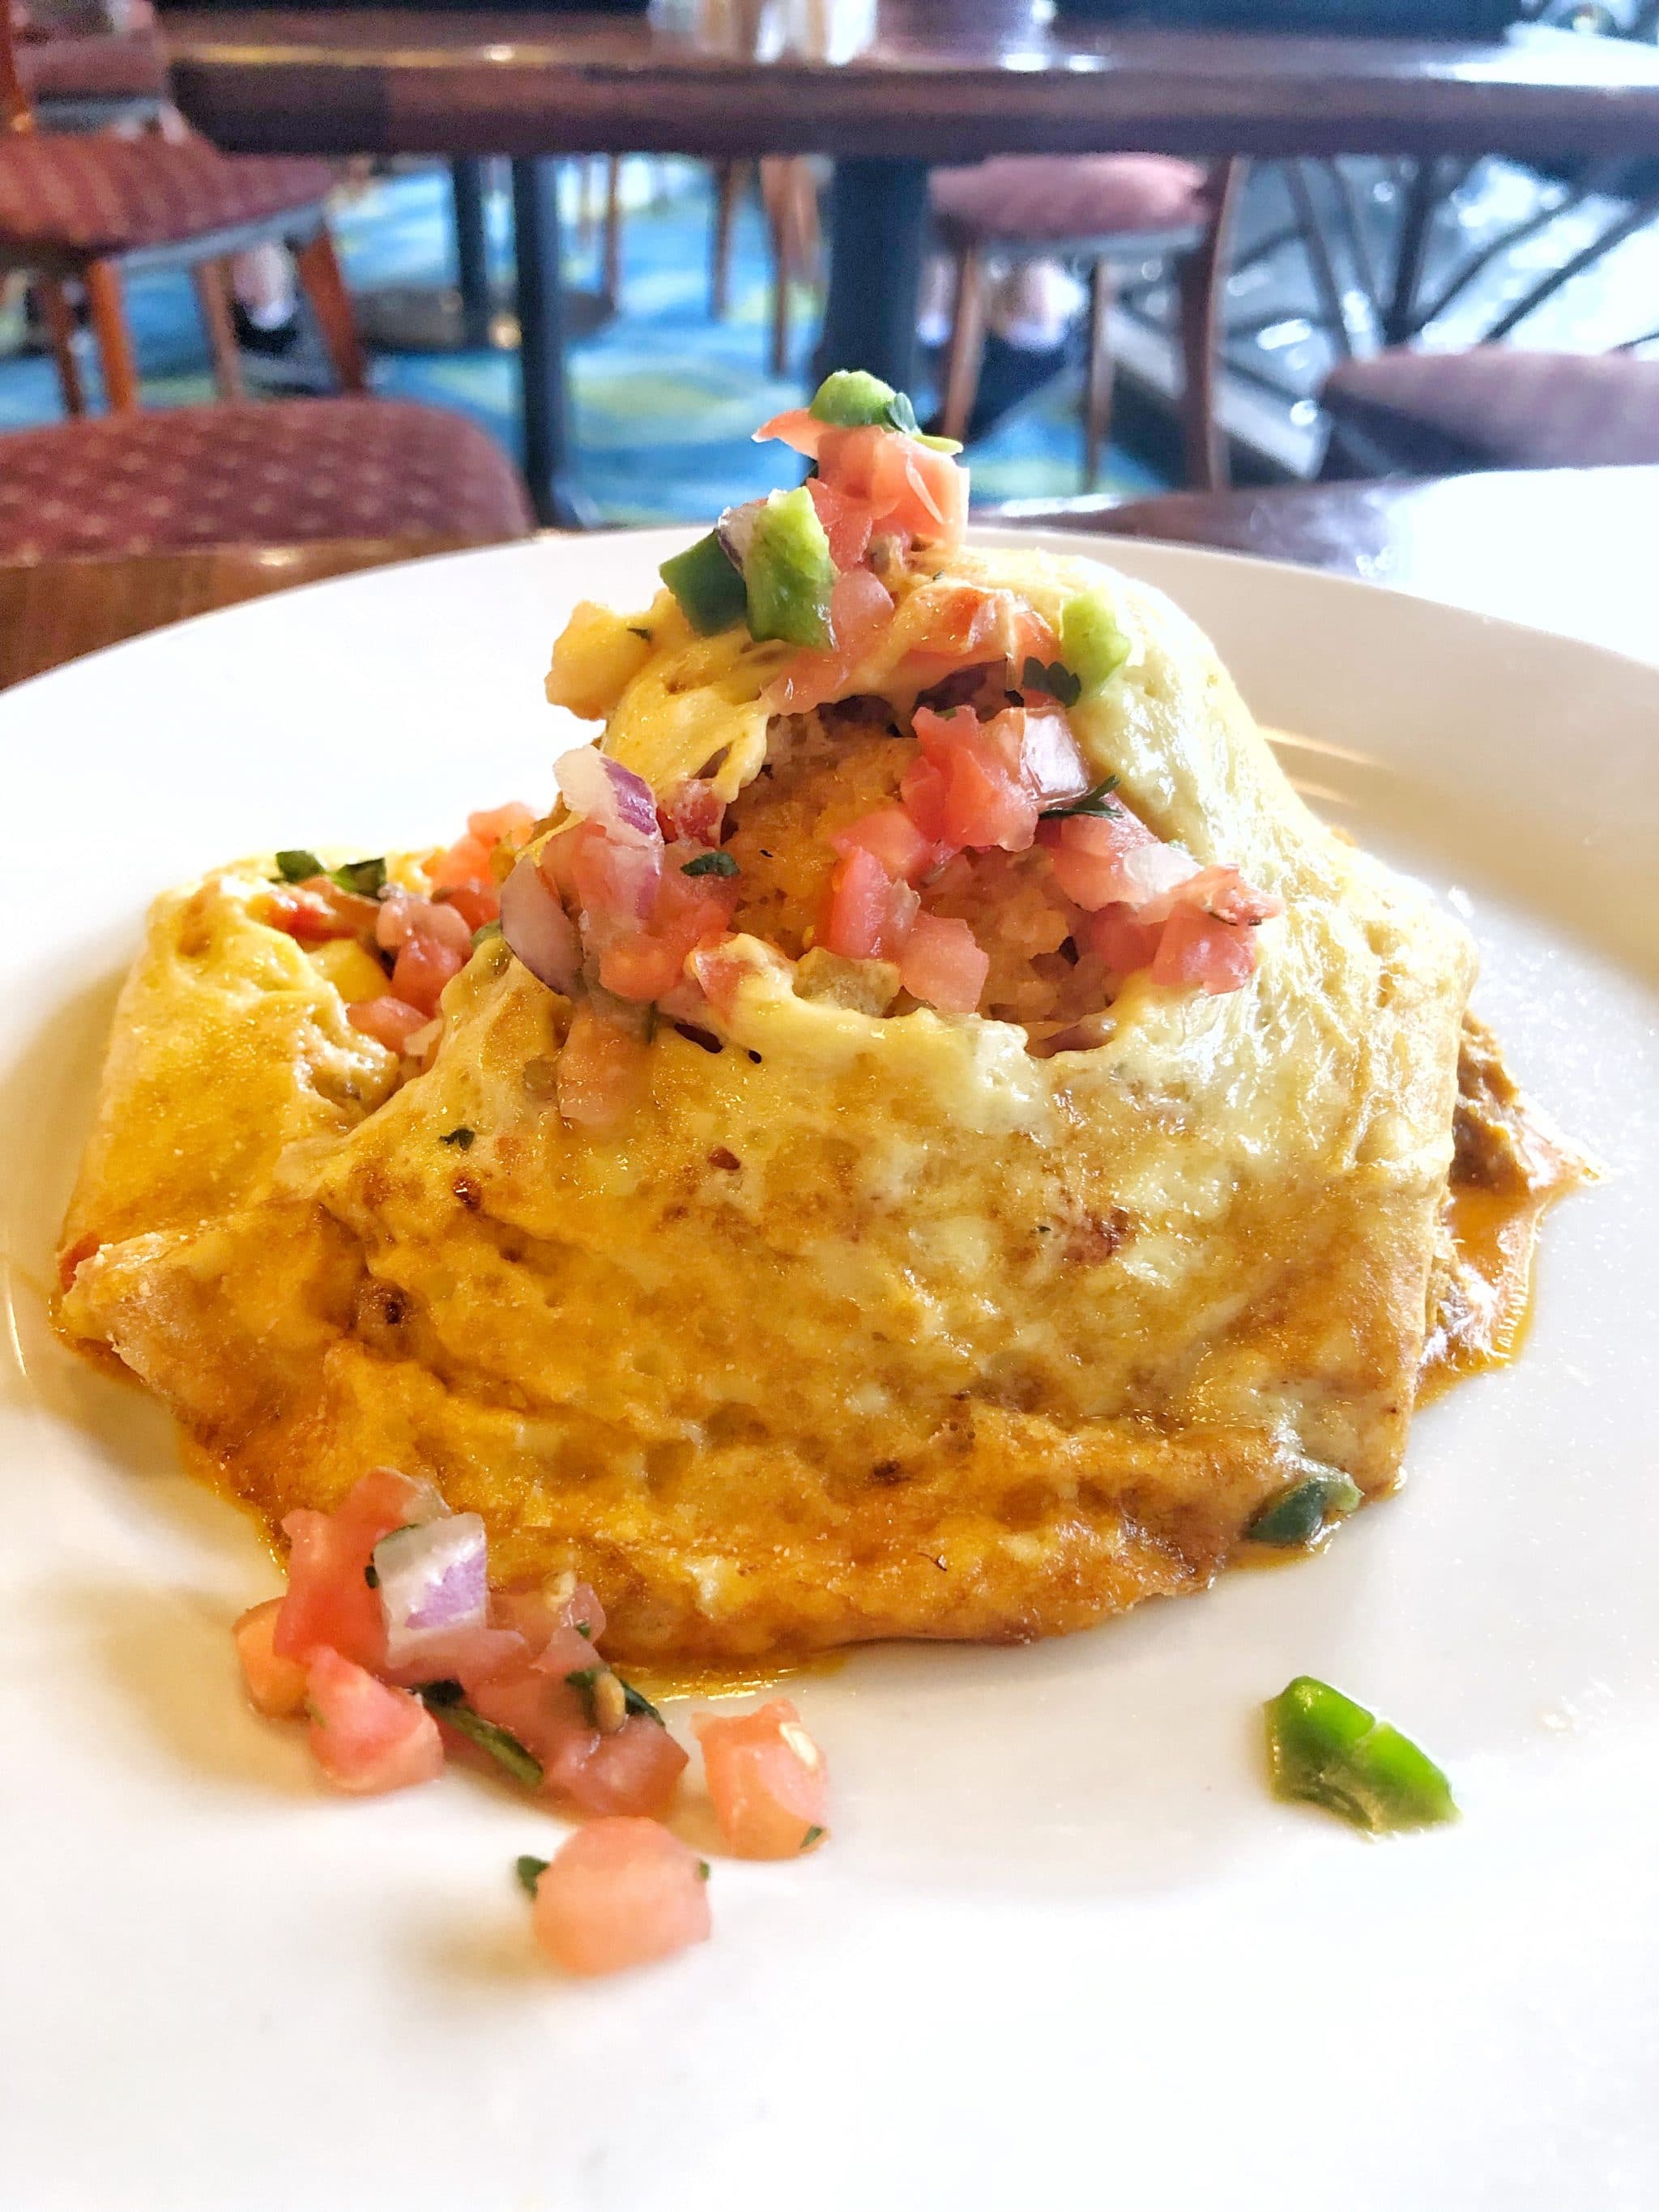 Vegan Breakfast Review at Kona Cafe in Disney’s Polynesian Village Resort at Walt Disney World